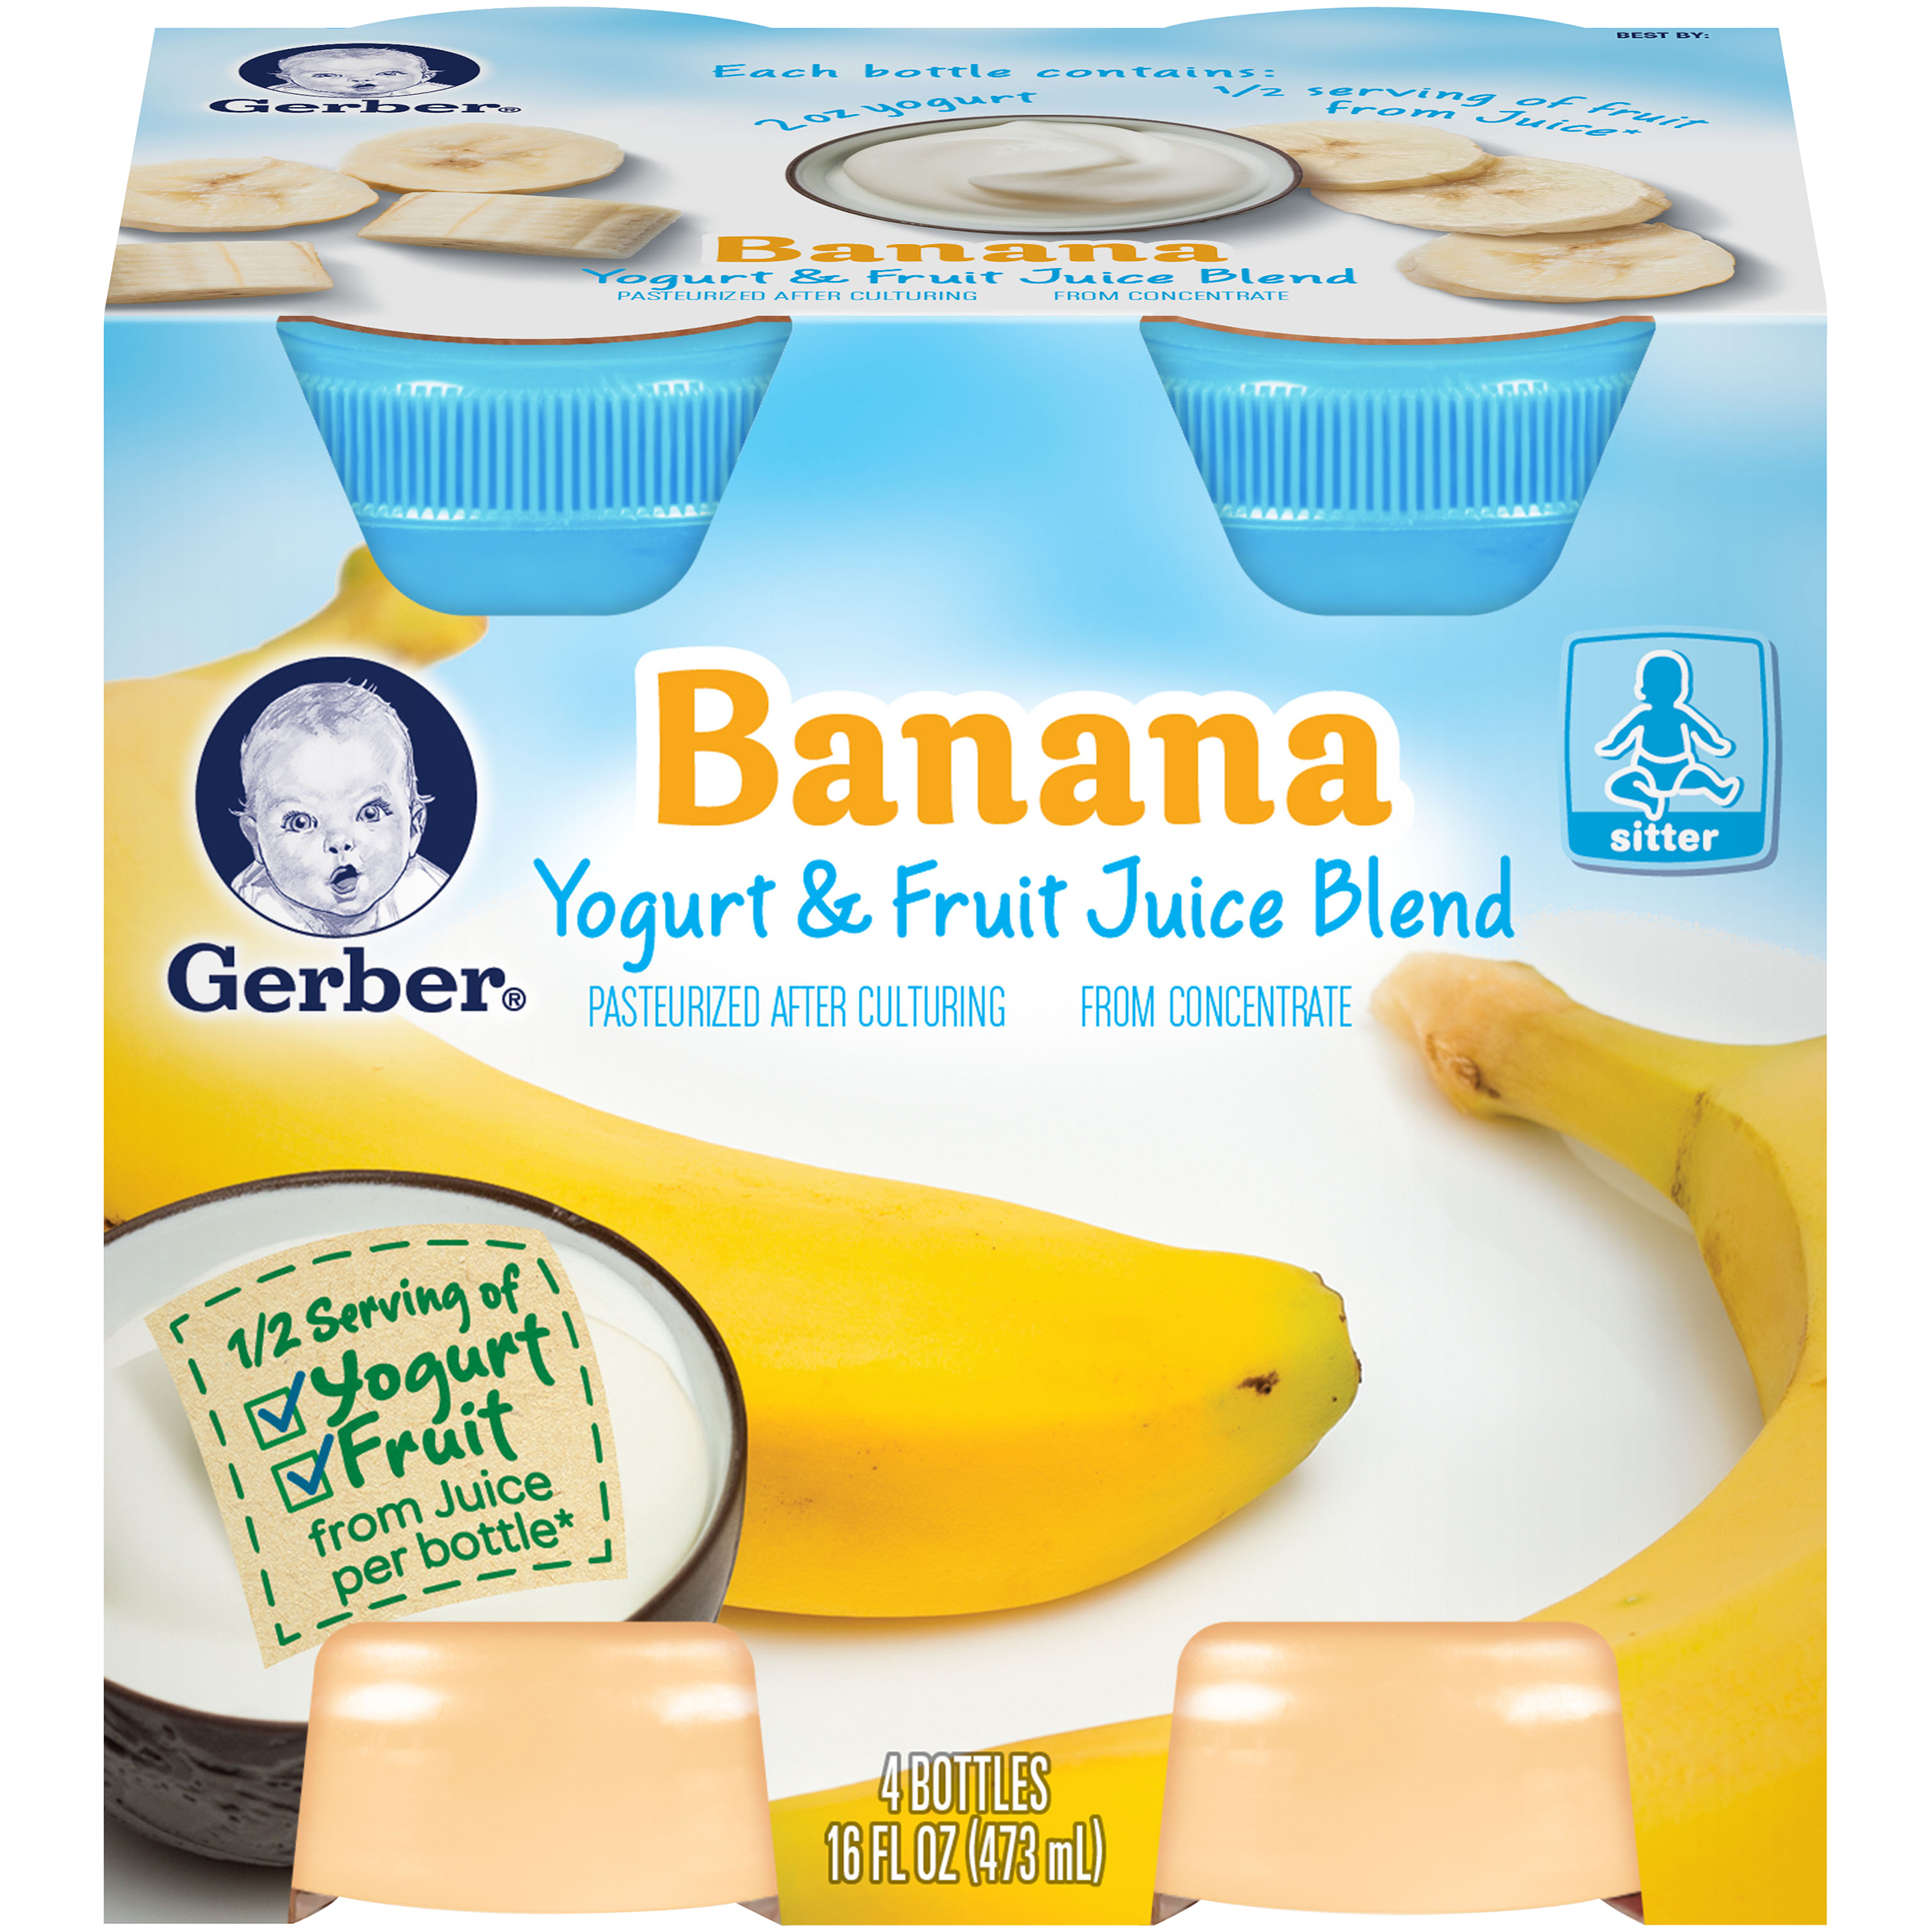 Gerber Yogurt Juice, Banana Yogurt & Fruit Juices, Sitter, 4 bottles [16 fl oz (473 ml)]